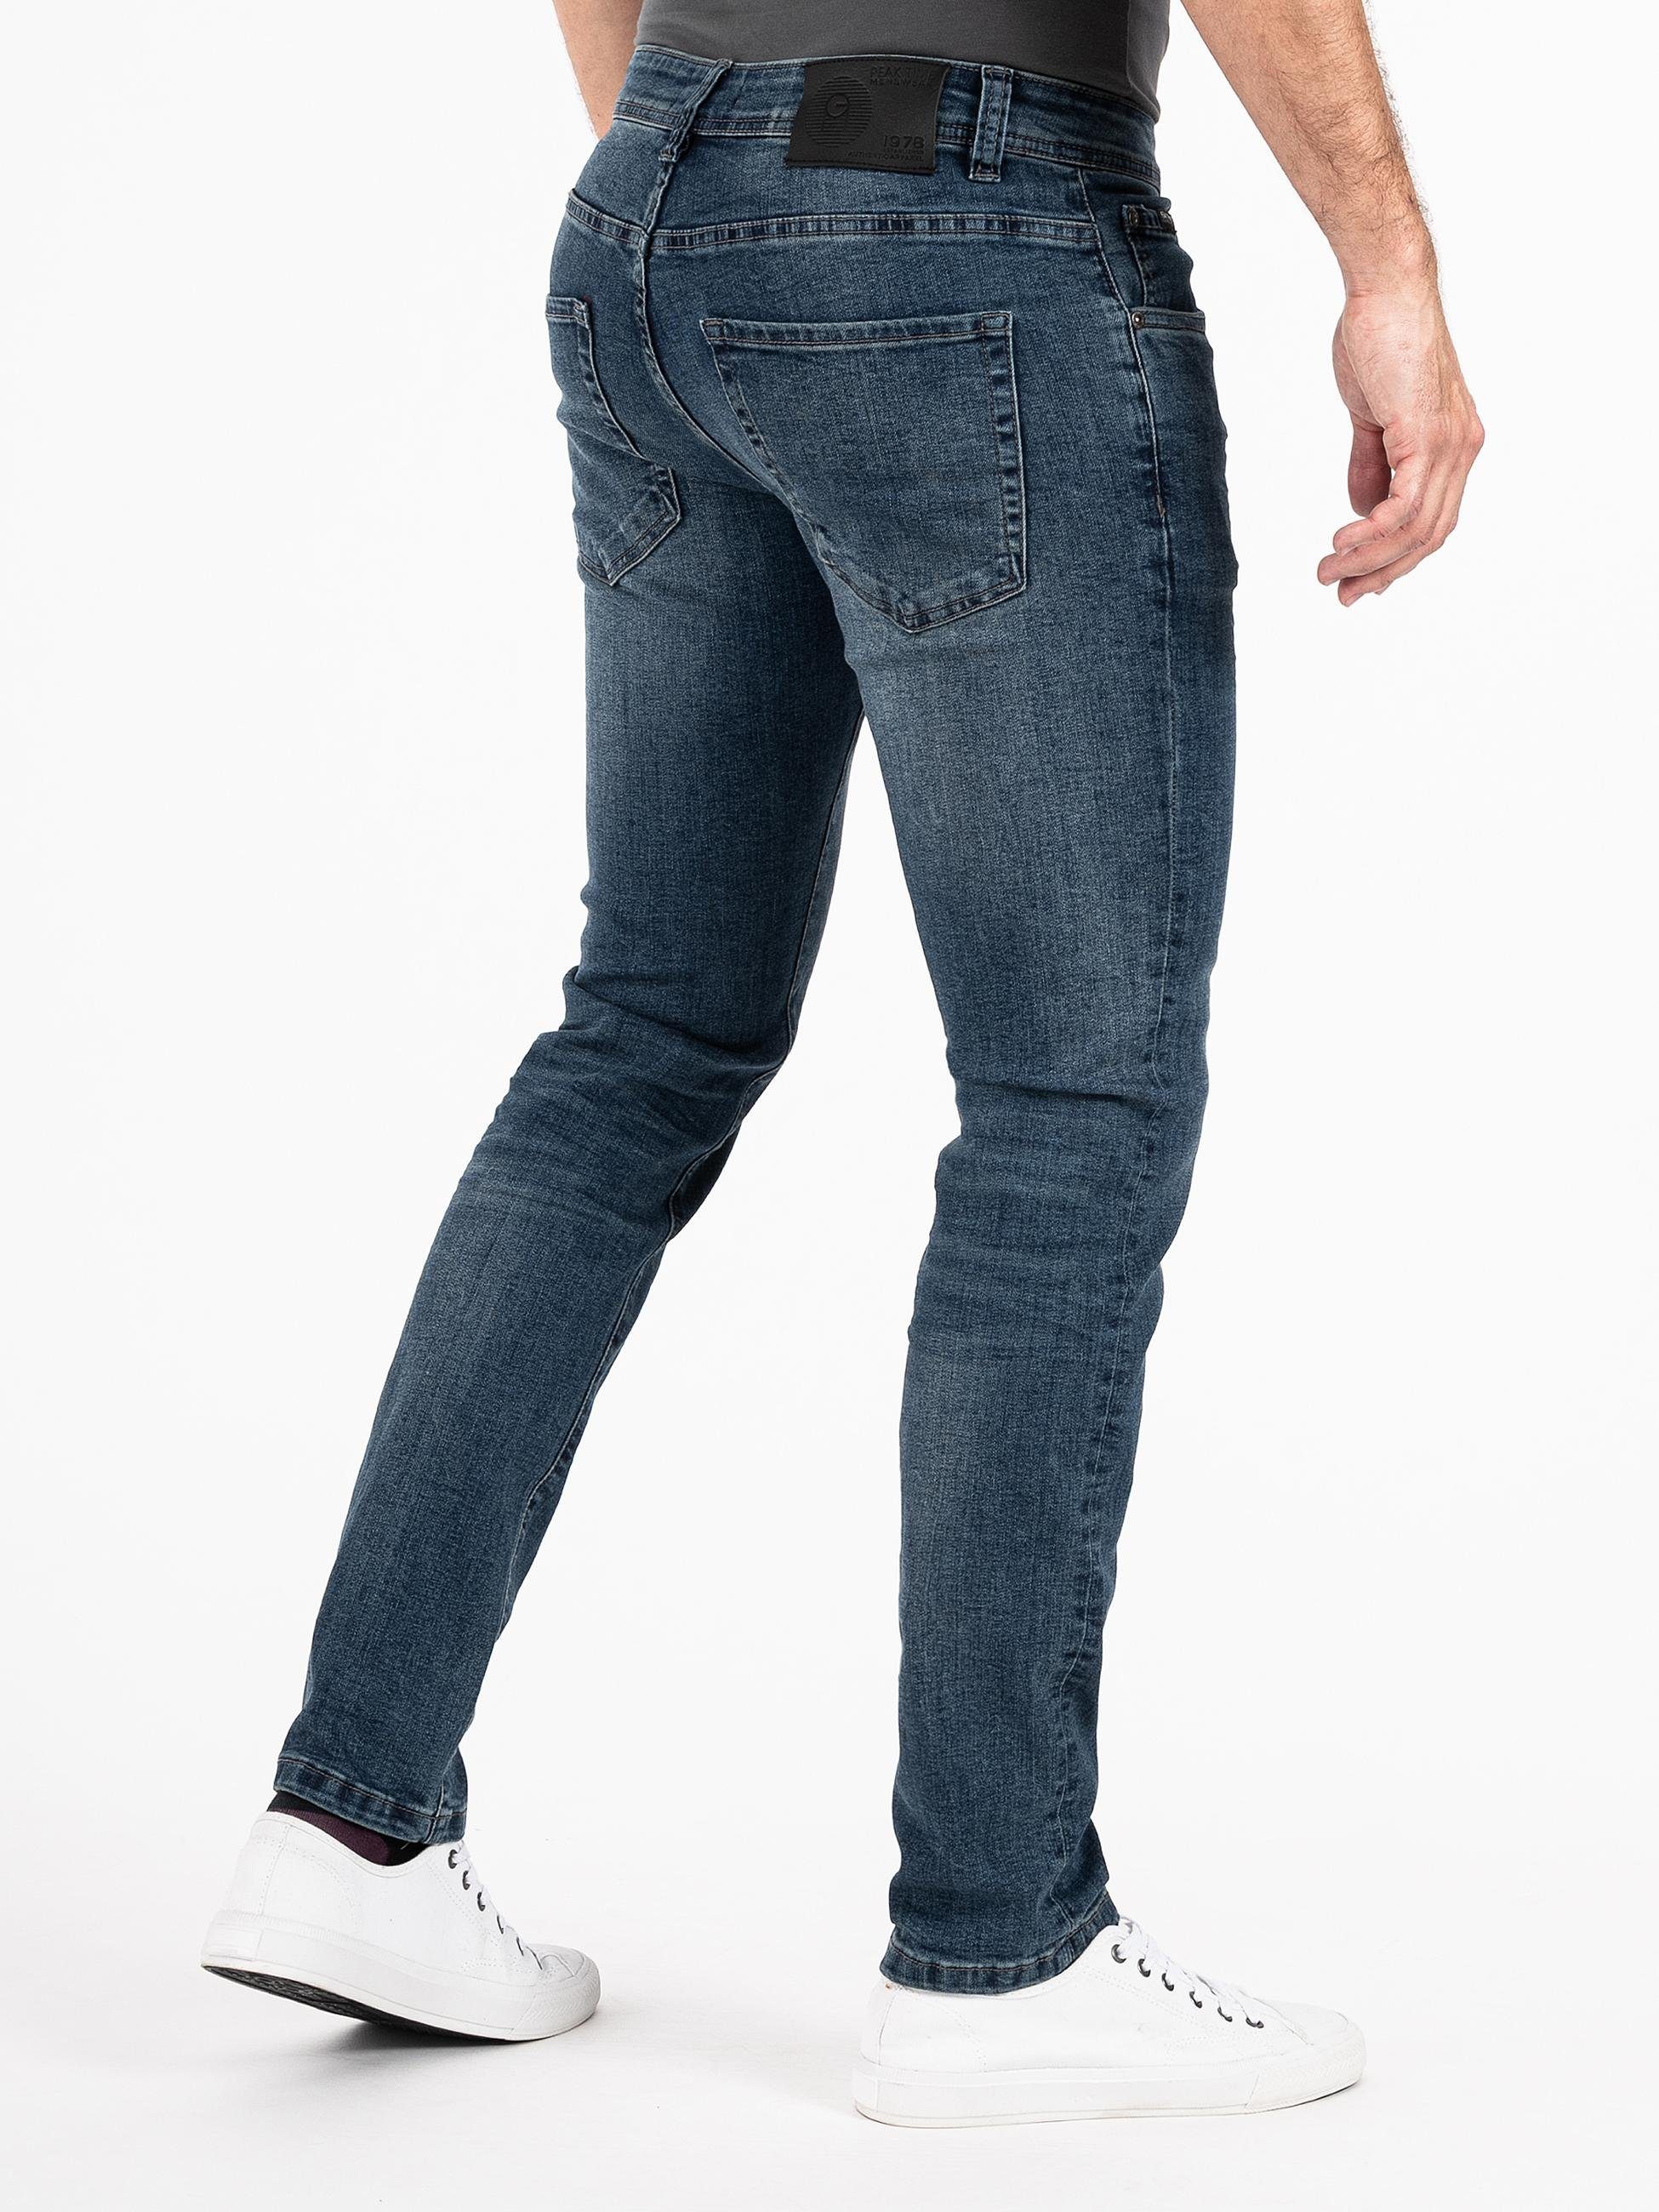 PEAK TIME Slim-fit-Jeans Mailand Jeans Herren hohem Stretch-Anteil mit super blau